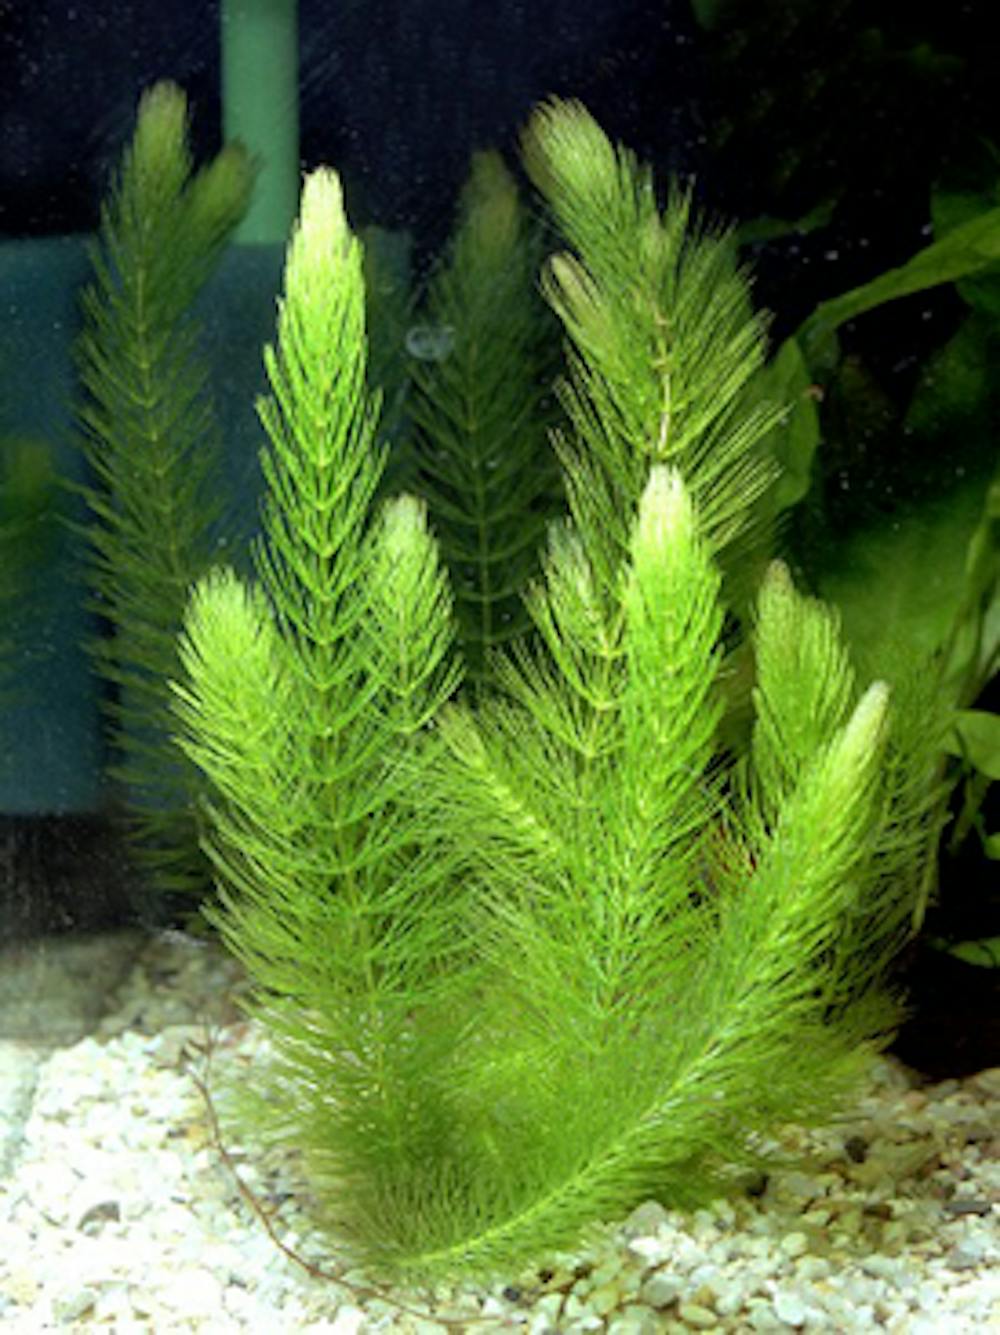 underwater river plants